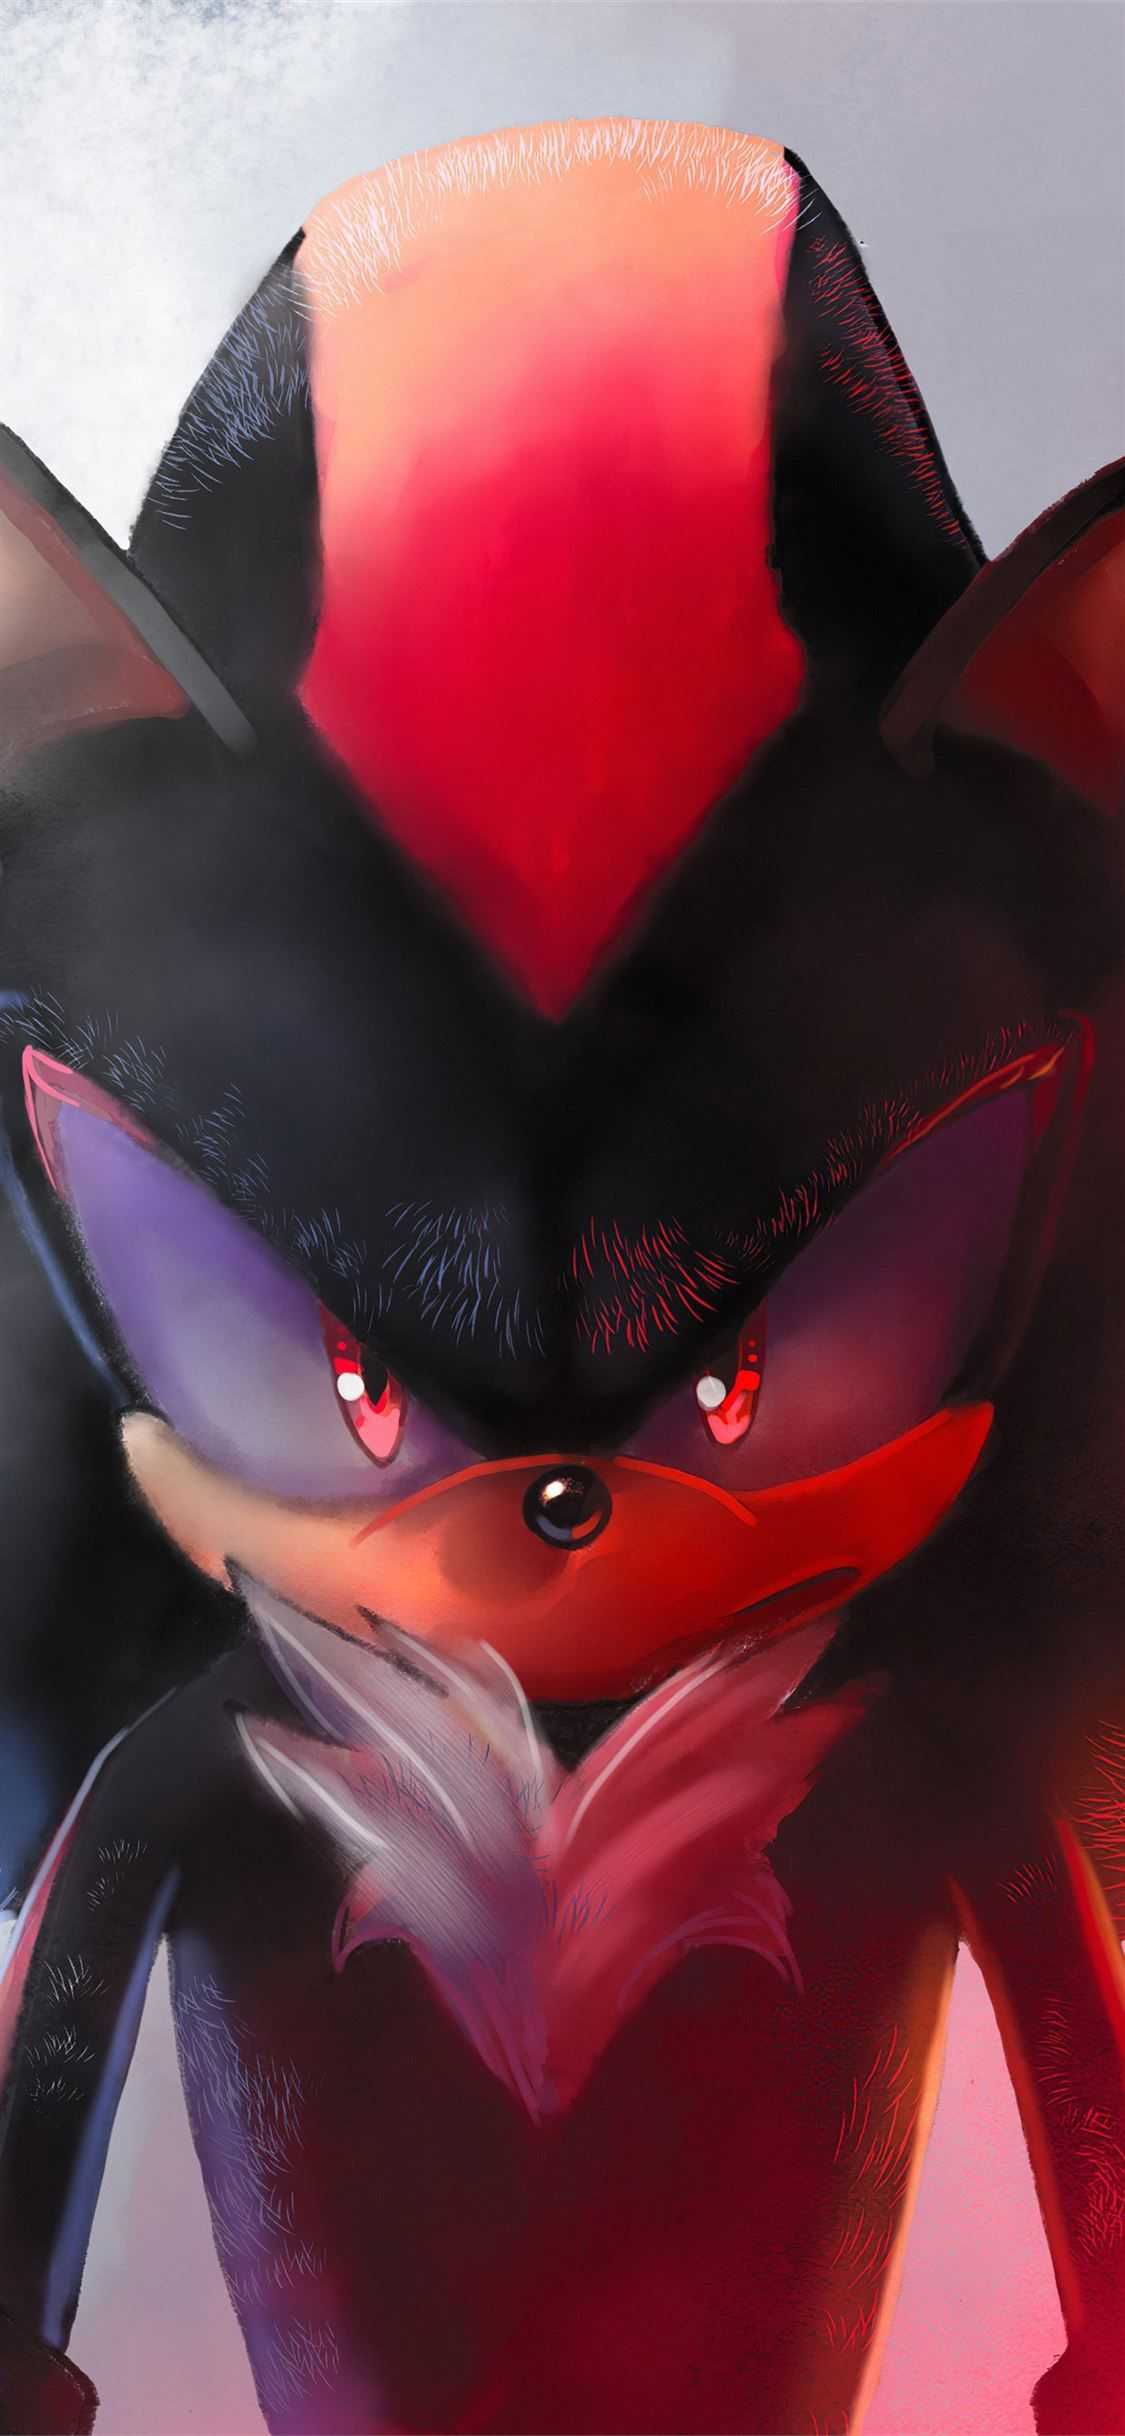 Shadow the Hedgehog Game 4K wallpaper download